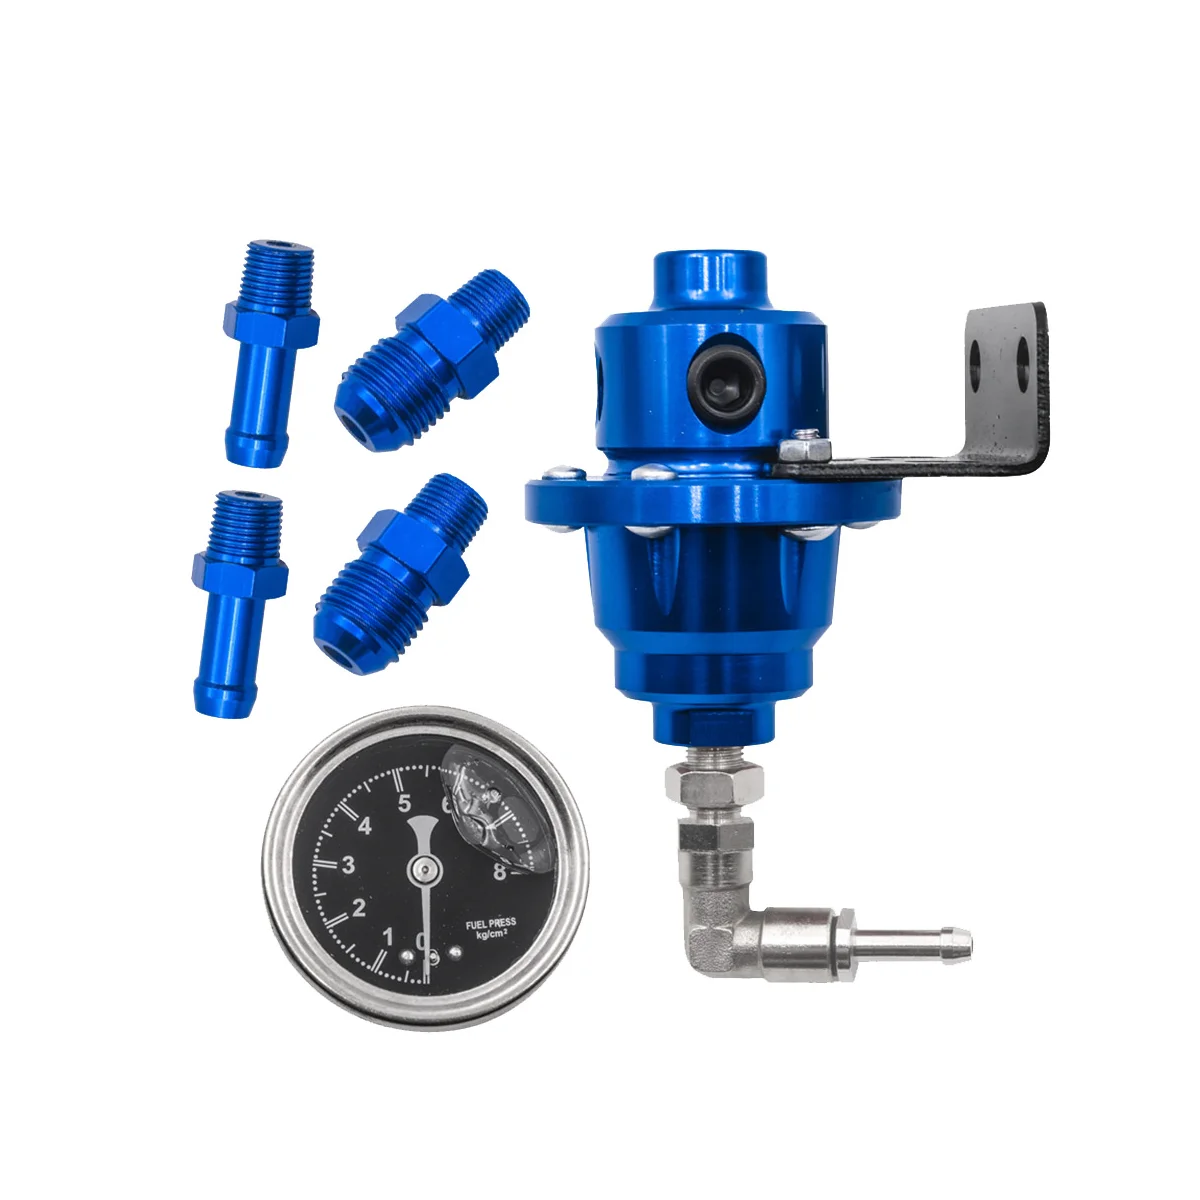 

Adjustable Fuel Regulator Fuel Booster Universal Pressure Regulator with Pressure Gauge Car Accessories,Blue